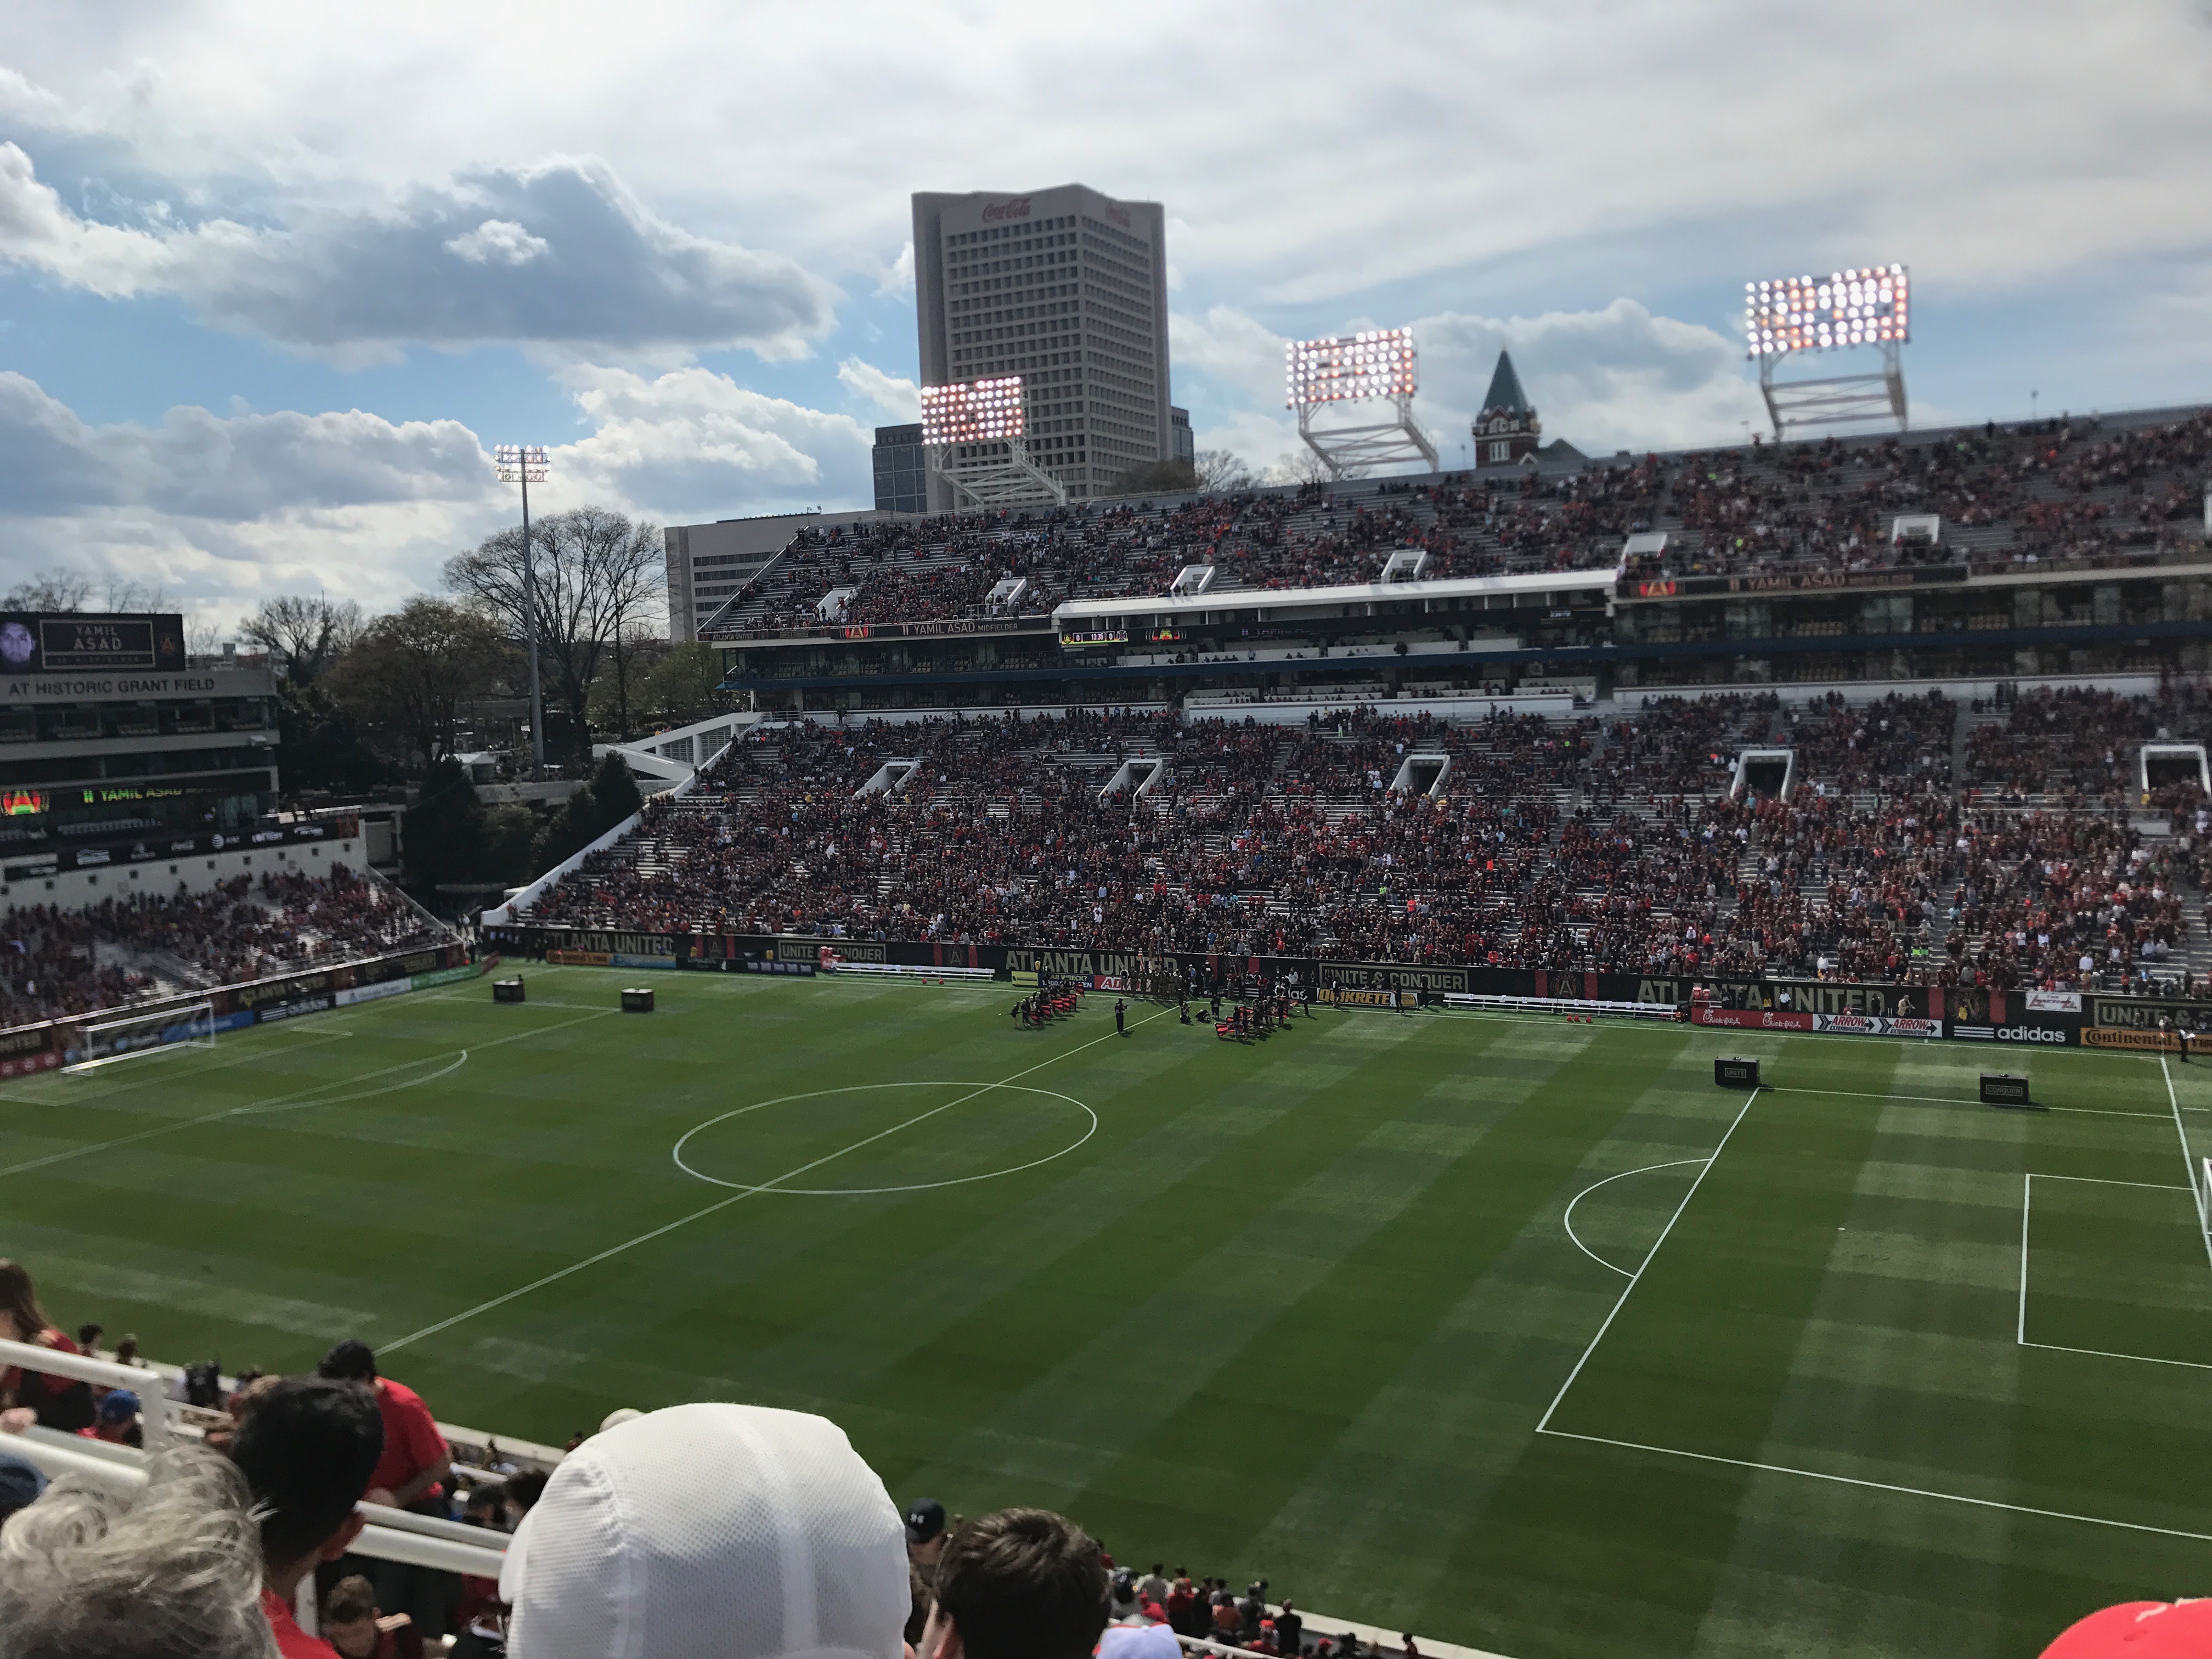 Pregame festivities before Atlanta United vs Chicago Fire at Bobby Dodd Stadium at Historic Grant Field, Atlanta, GA (March 18, 2017)